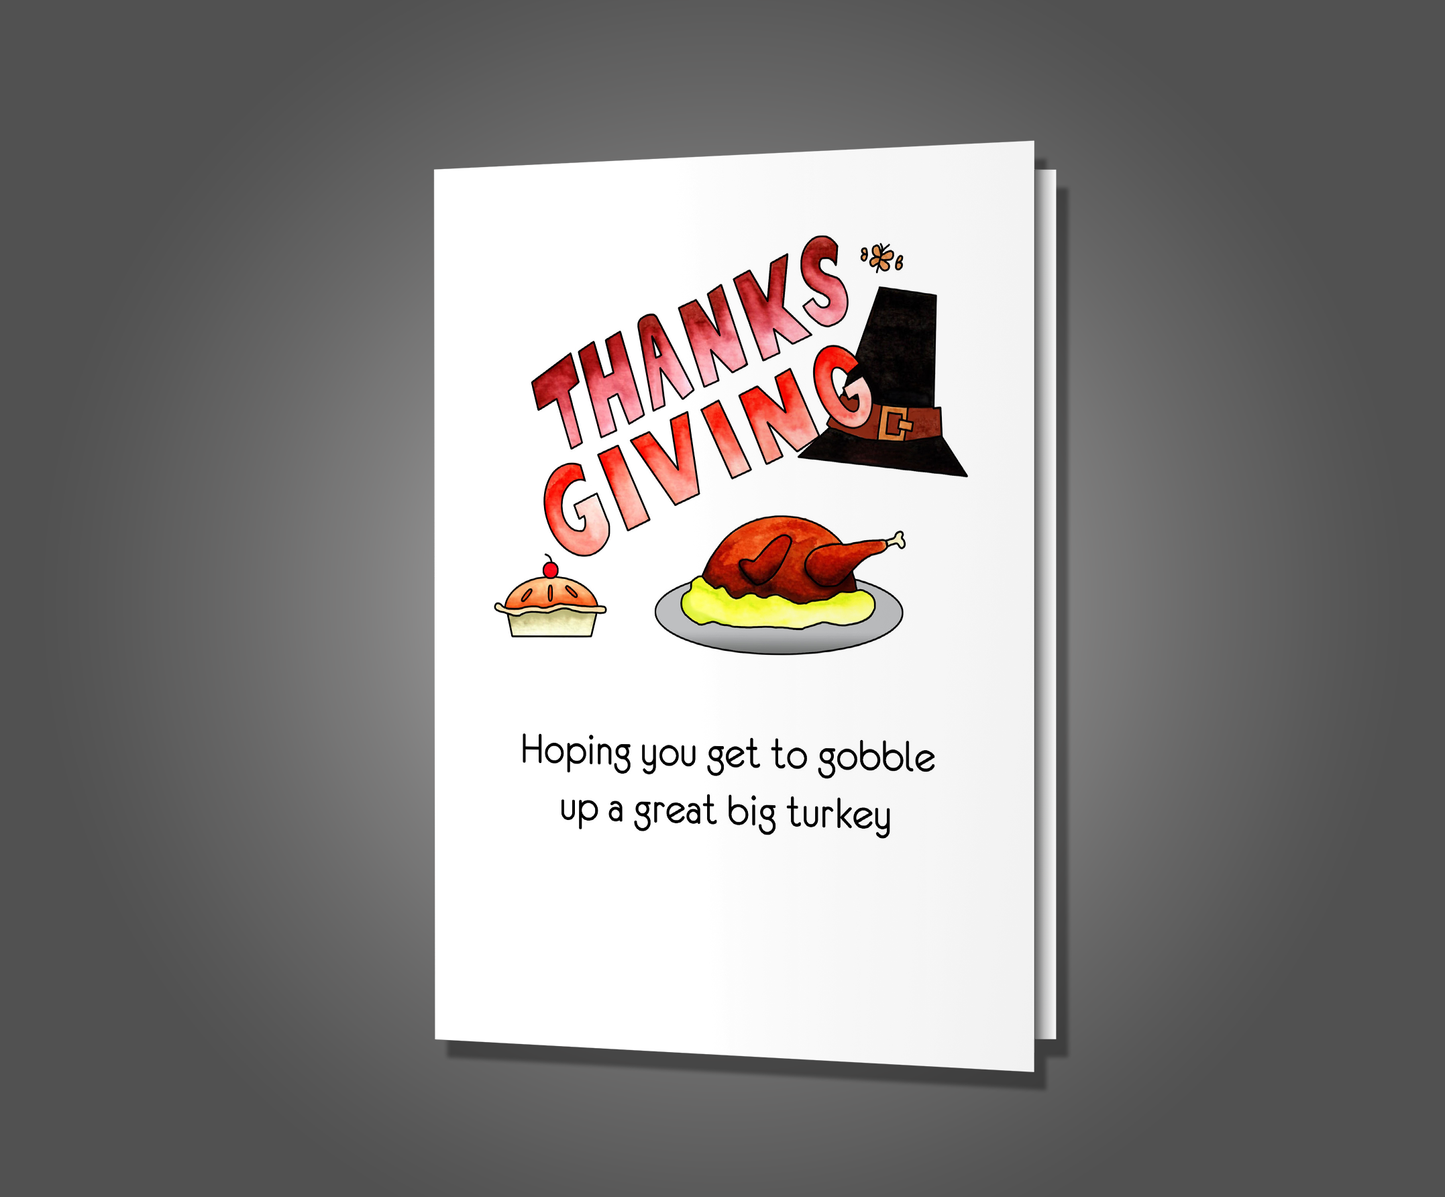 Tapeworm Turkey, Thanksgiving Card